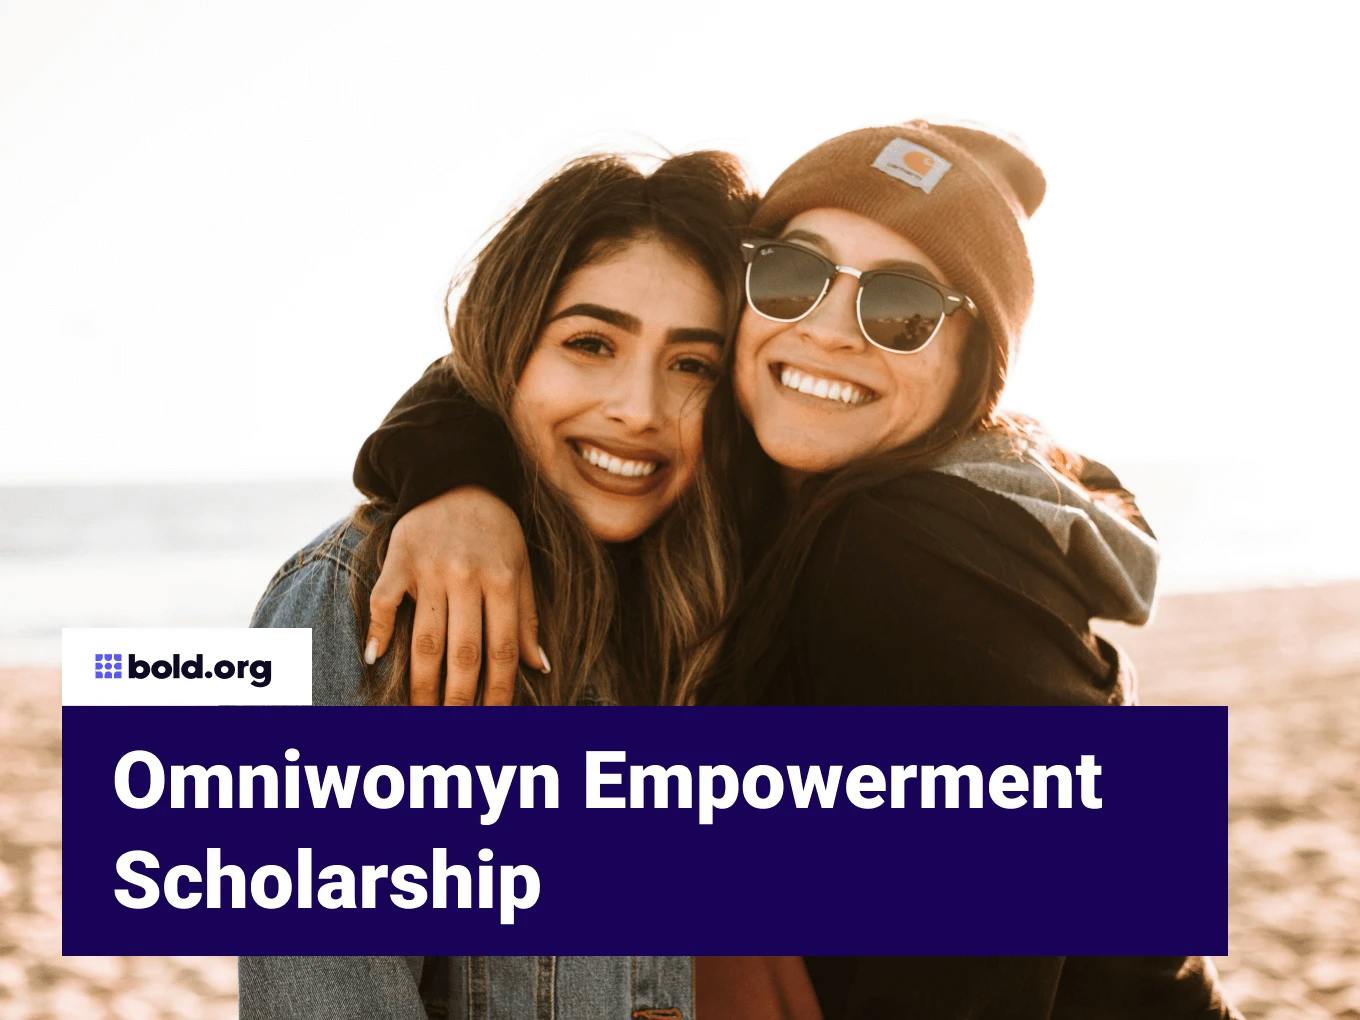 Omniwomyn Empowerment Scholarship